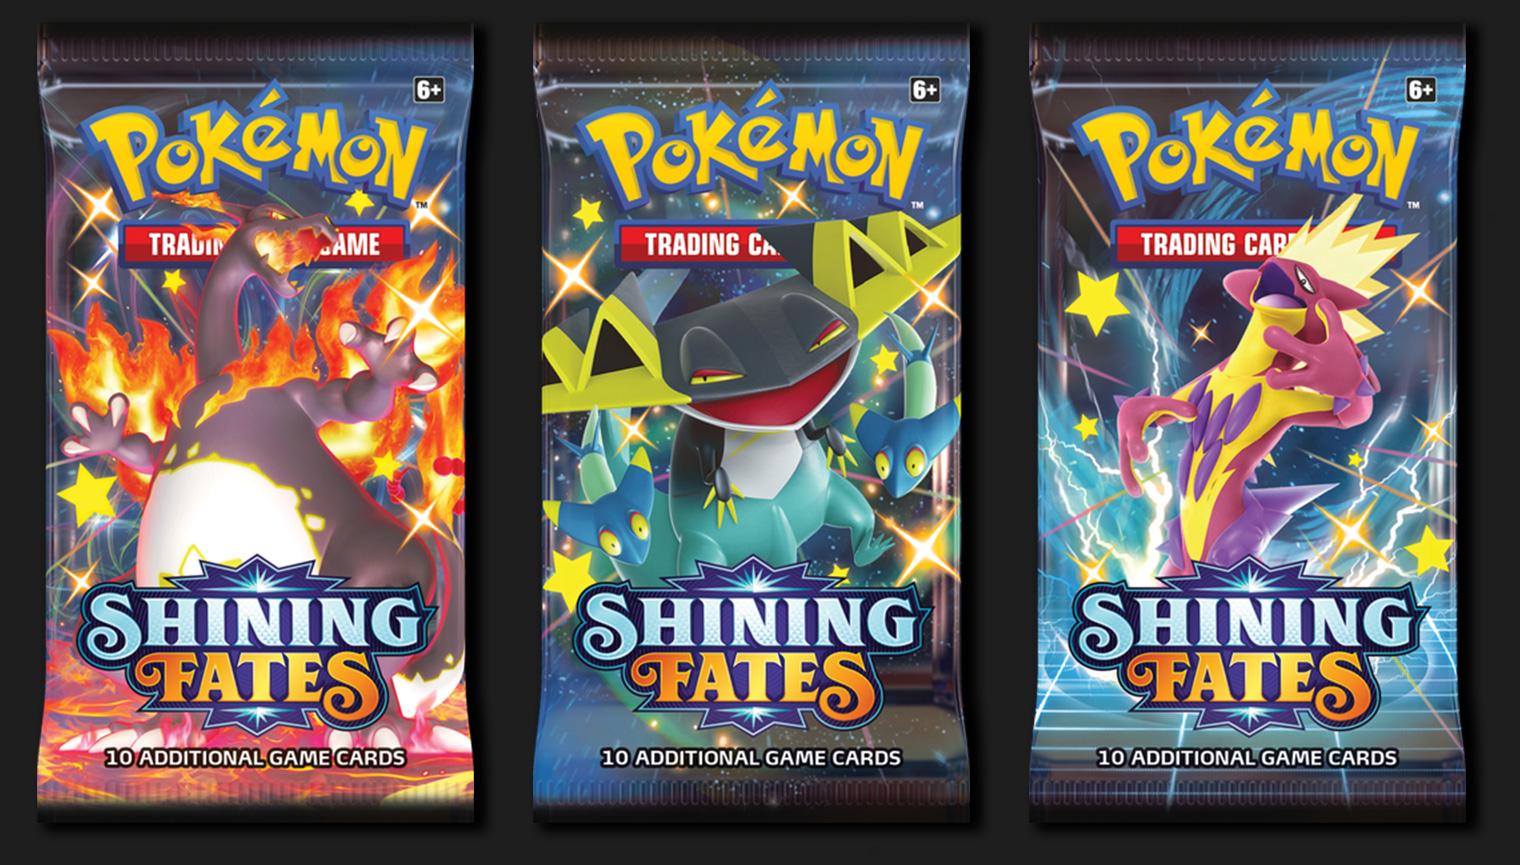 Pokemon Trading Card Game Shining Fates set.